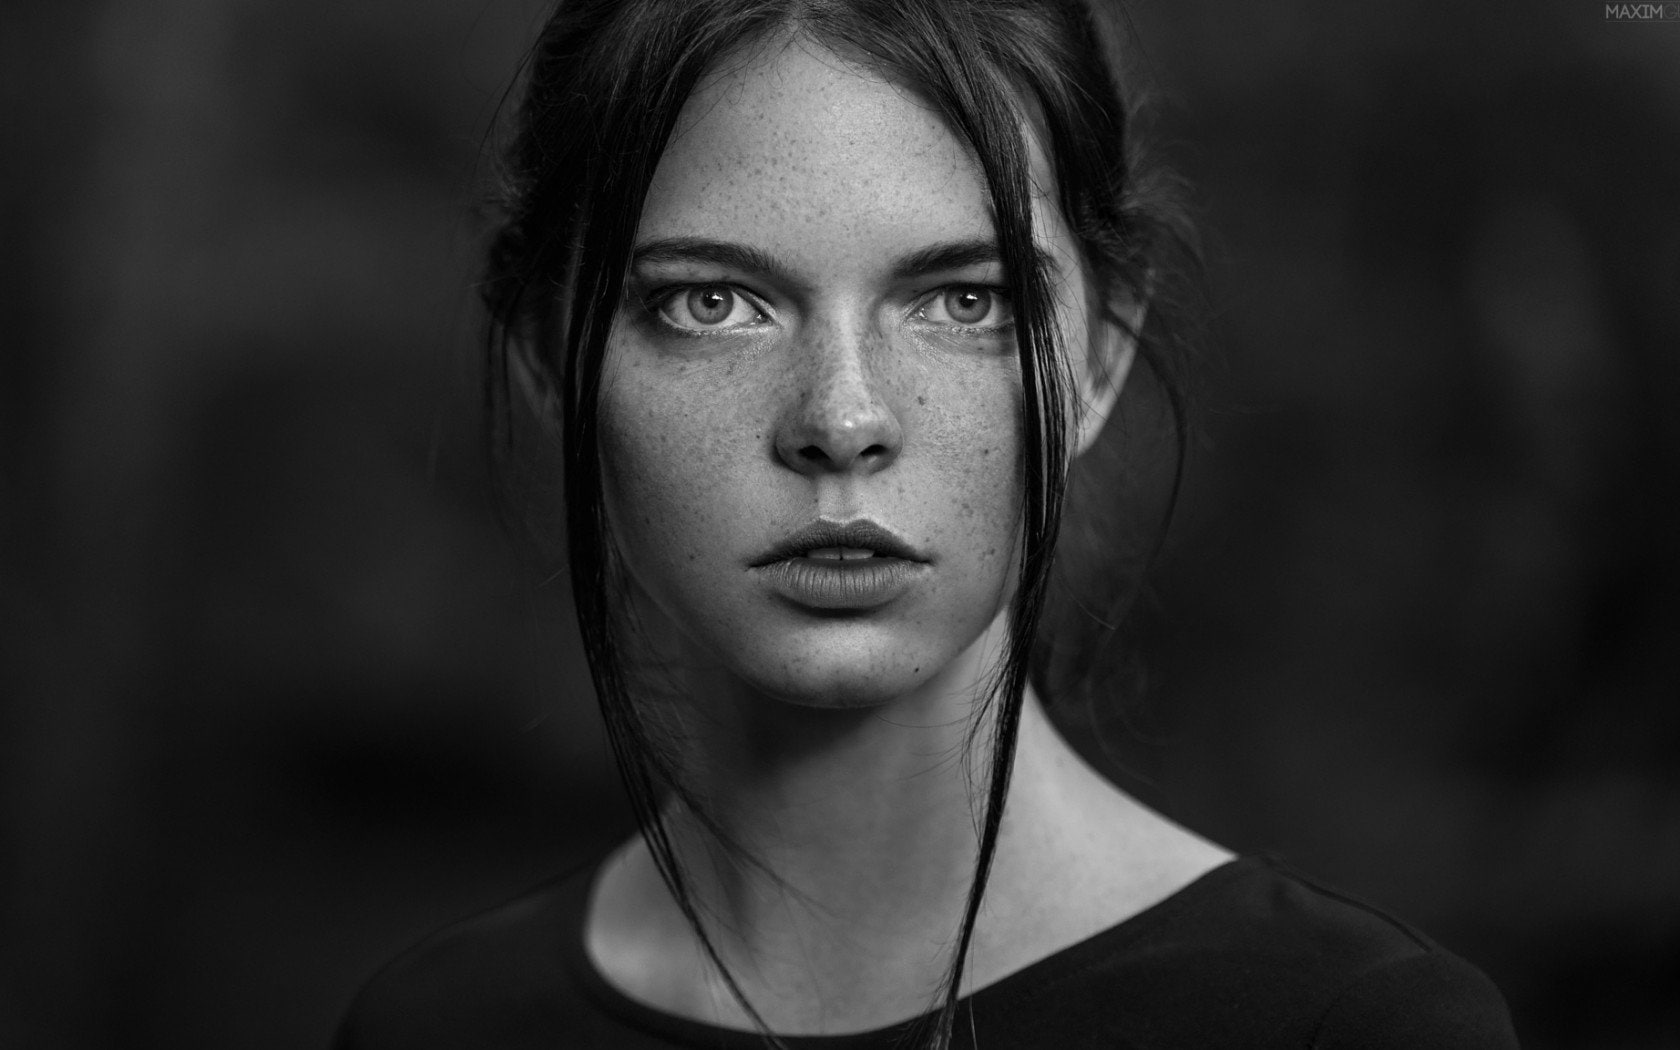 Women, Face, Black & White, Portrait, Woman